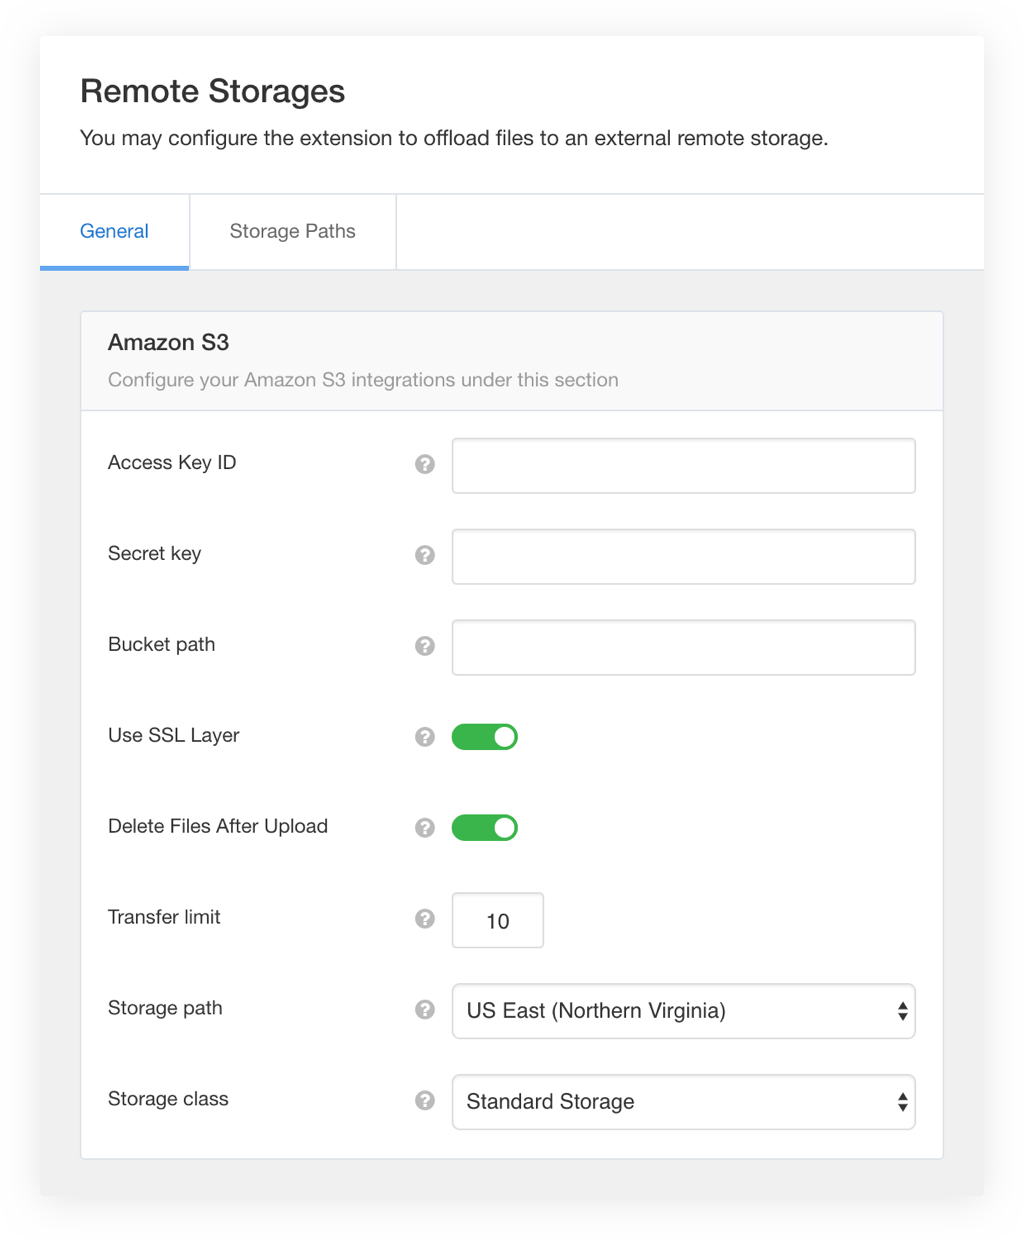 EasySocial - Remote Storage with Amazon S3